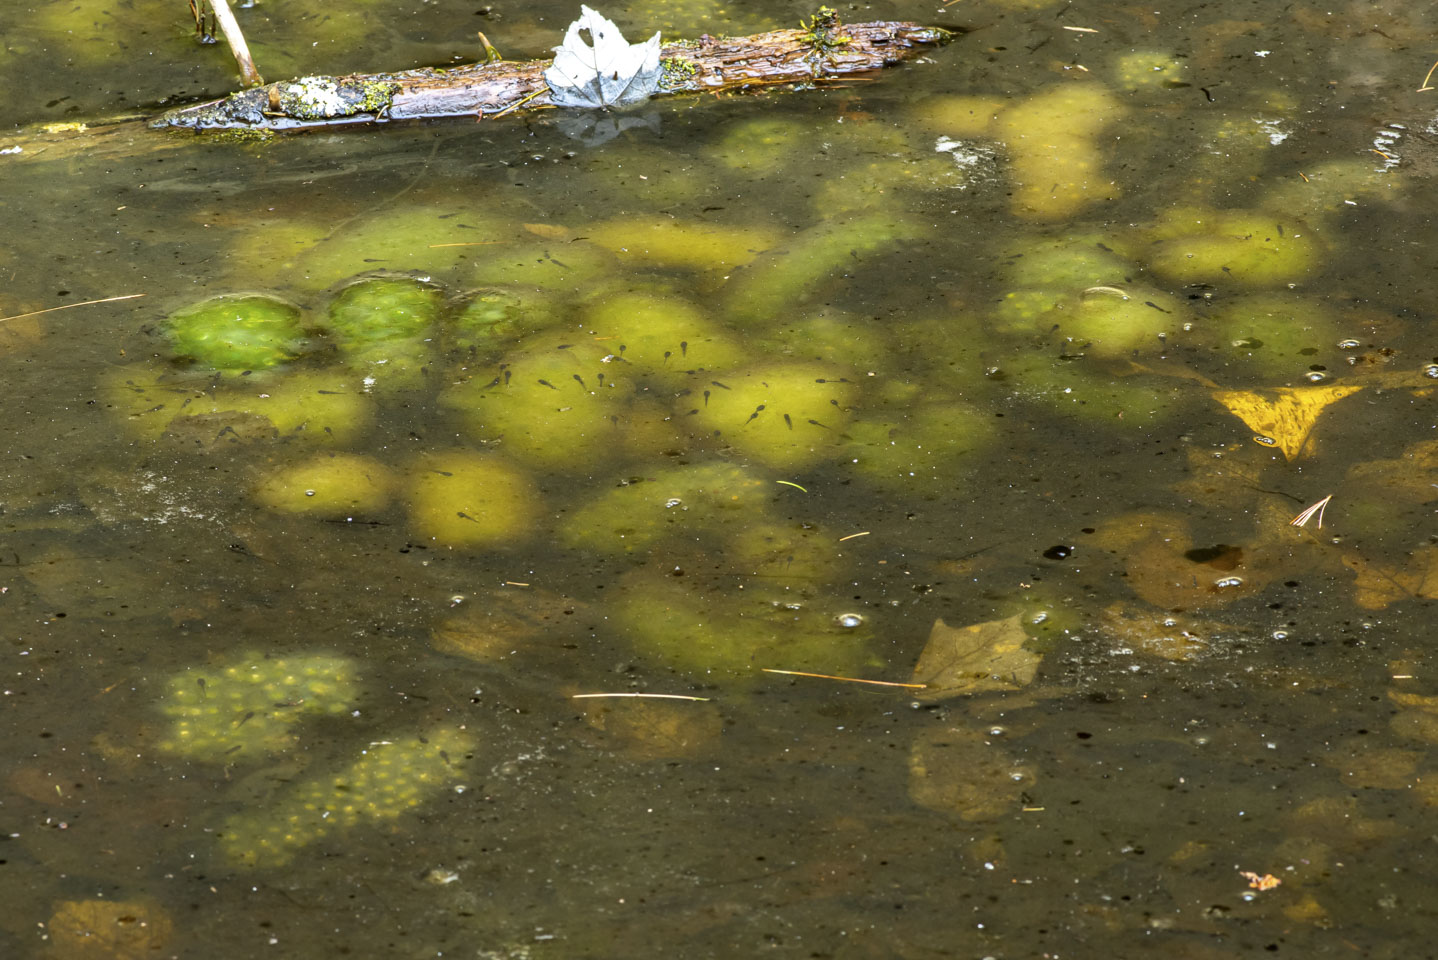 tadpoles seen swimming above frog egg sacks in a vernal pool